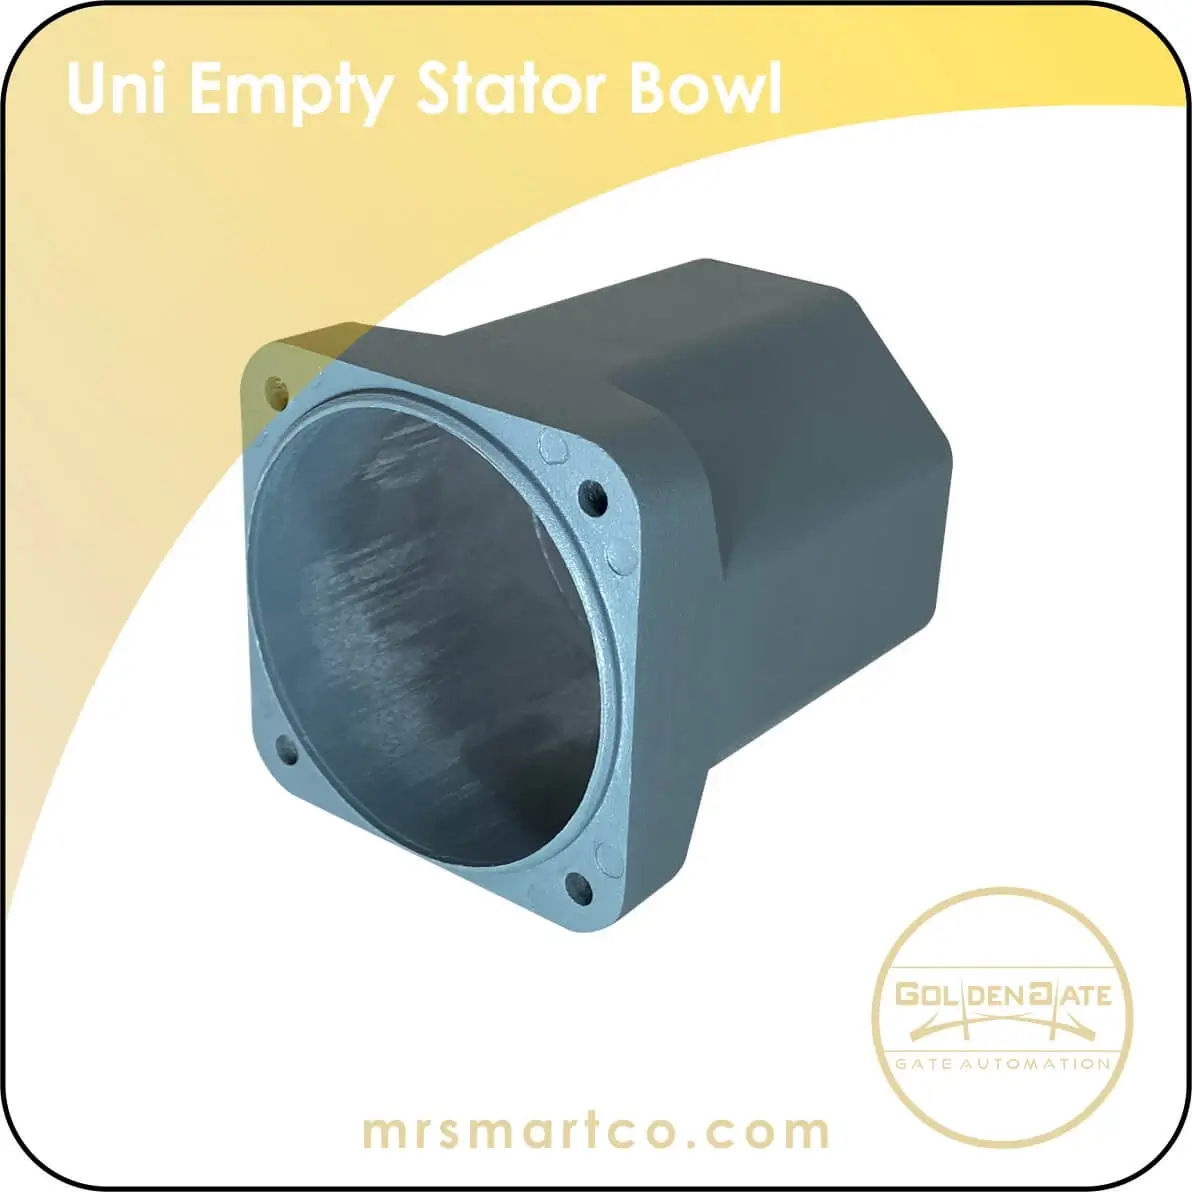 Uni Empty stator bowl